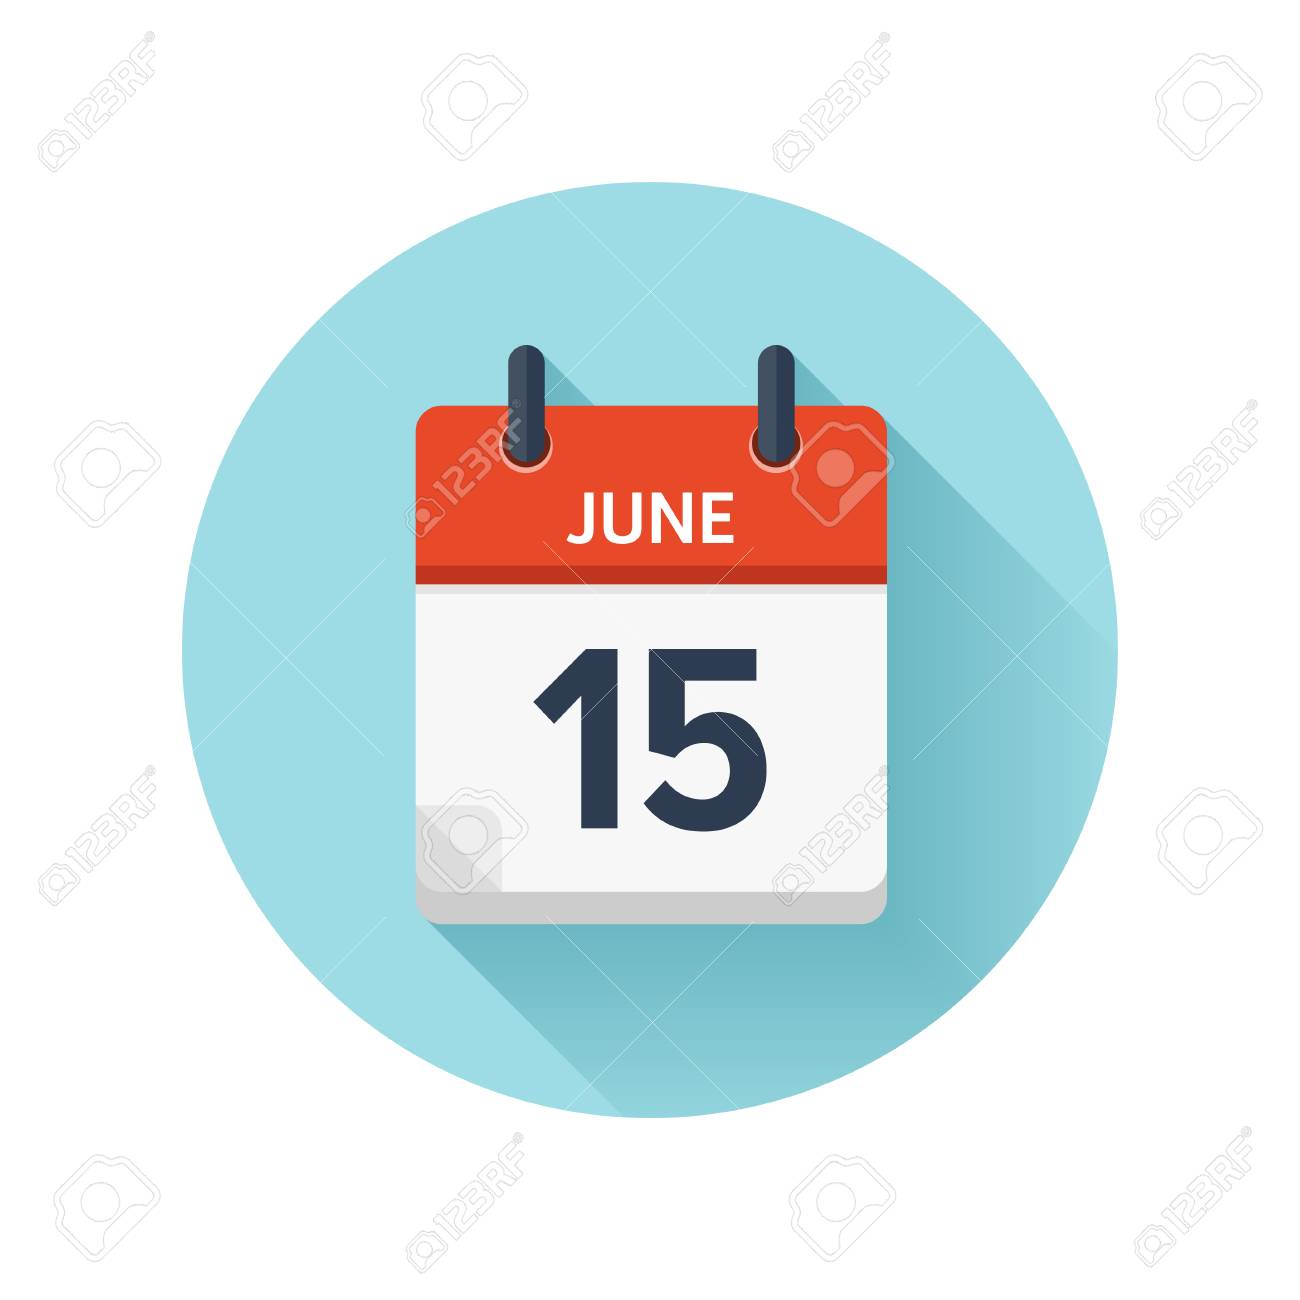 13 June 14 - رویداد های کریپتو و بلاکچین 26 خرداد (15 ژوئن)